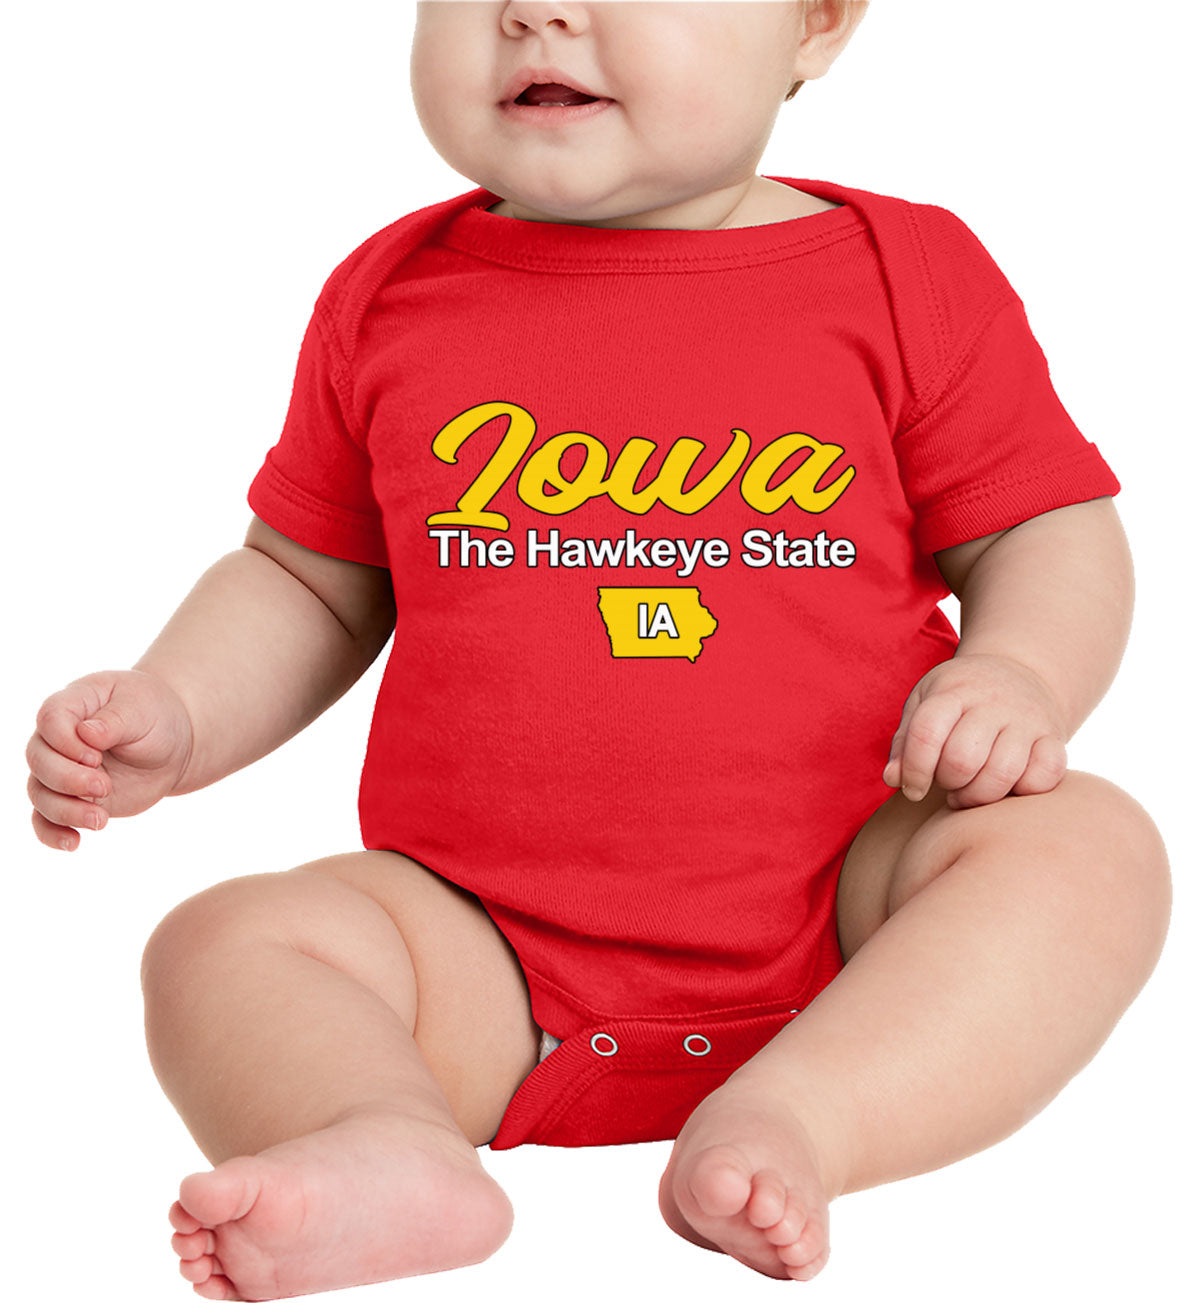 Iowa The Hawkeye State Baby Onesie